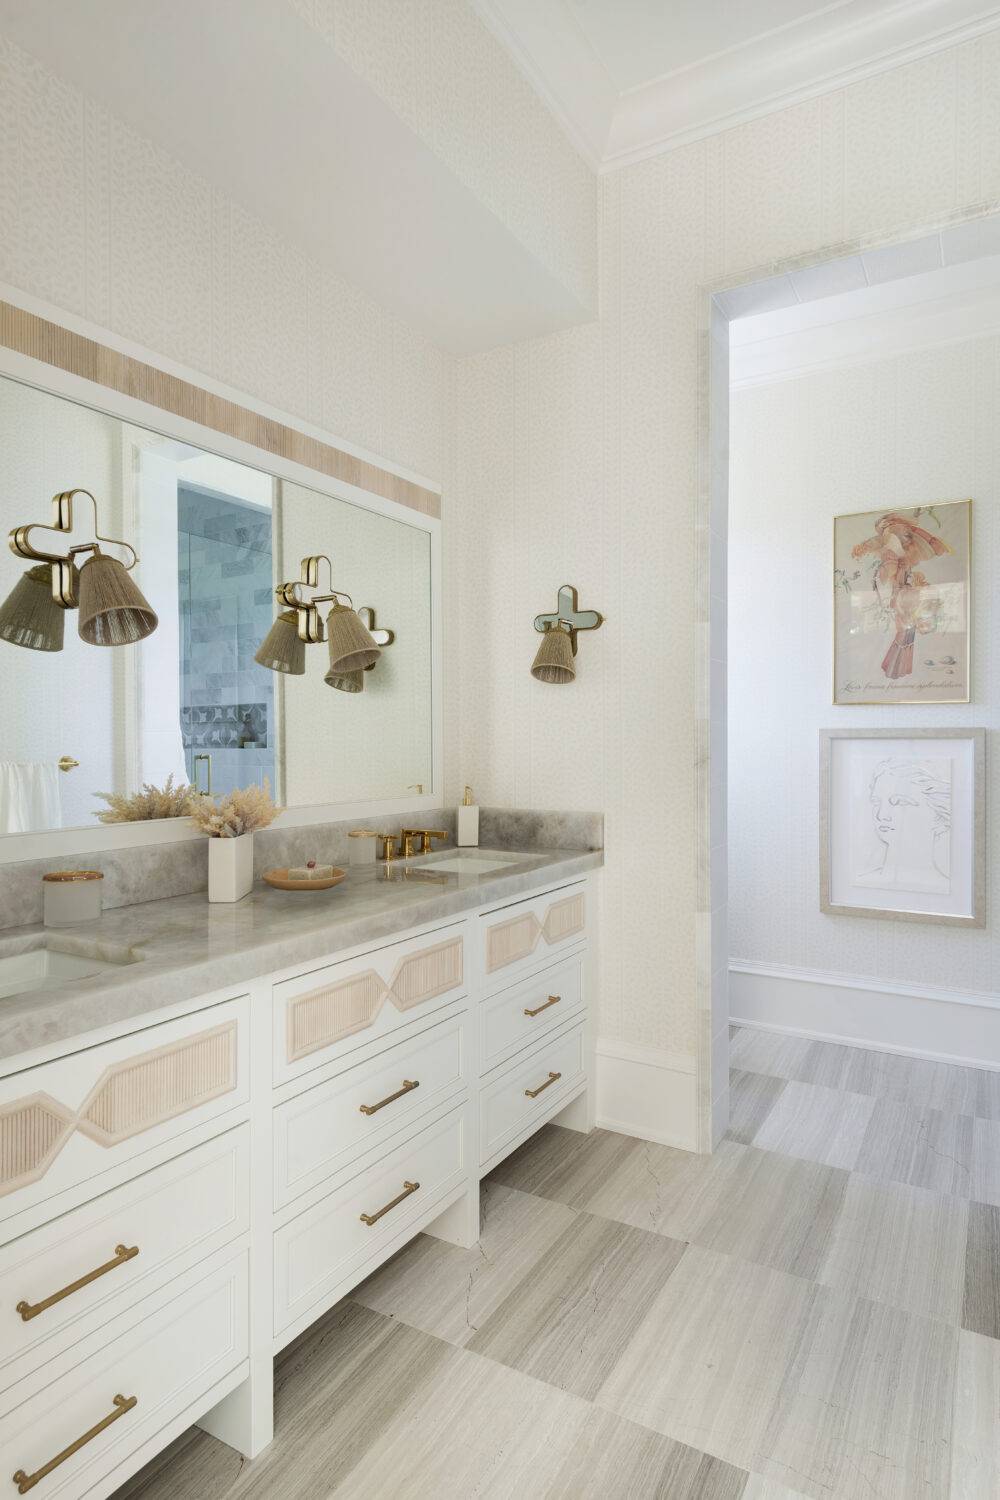 Guest bathroom sinks featuring Legno tile. 